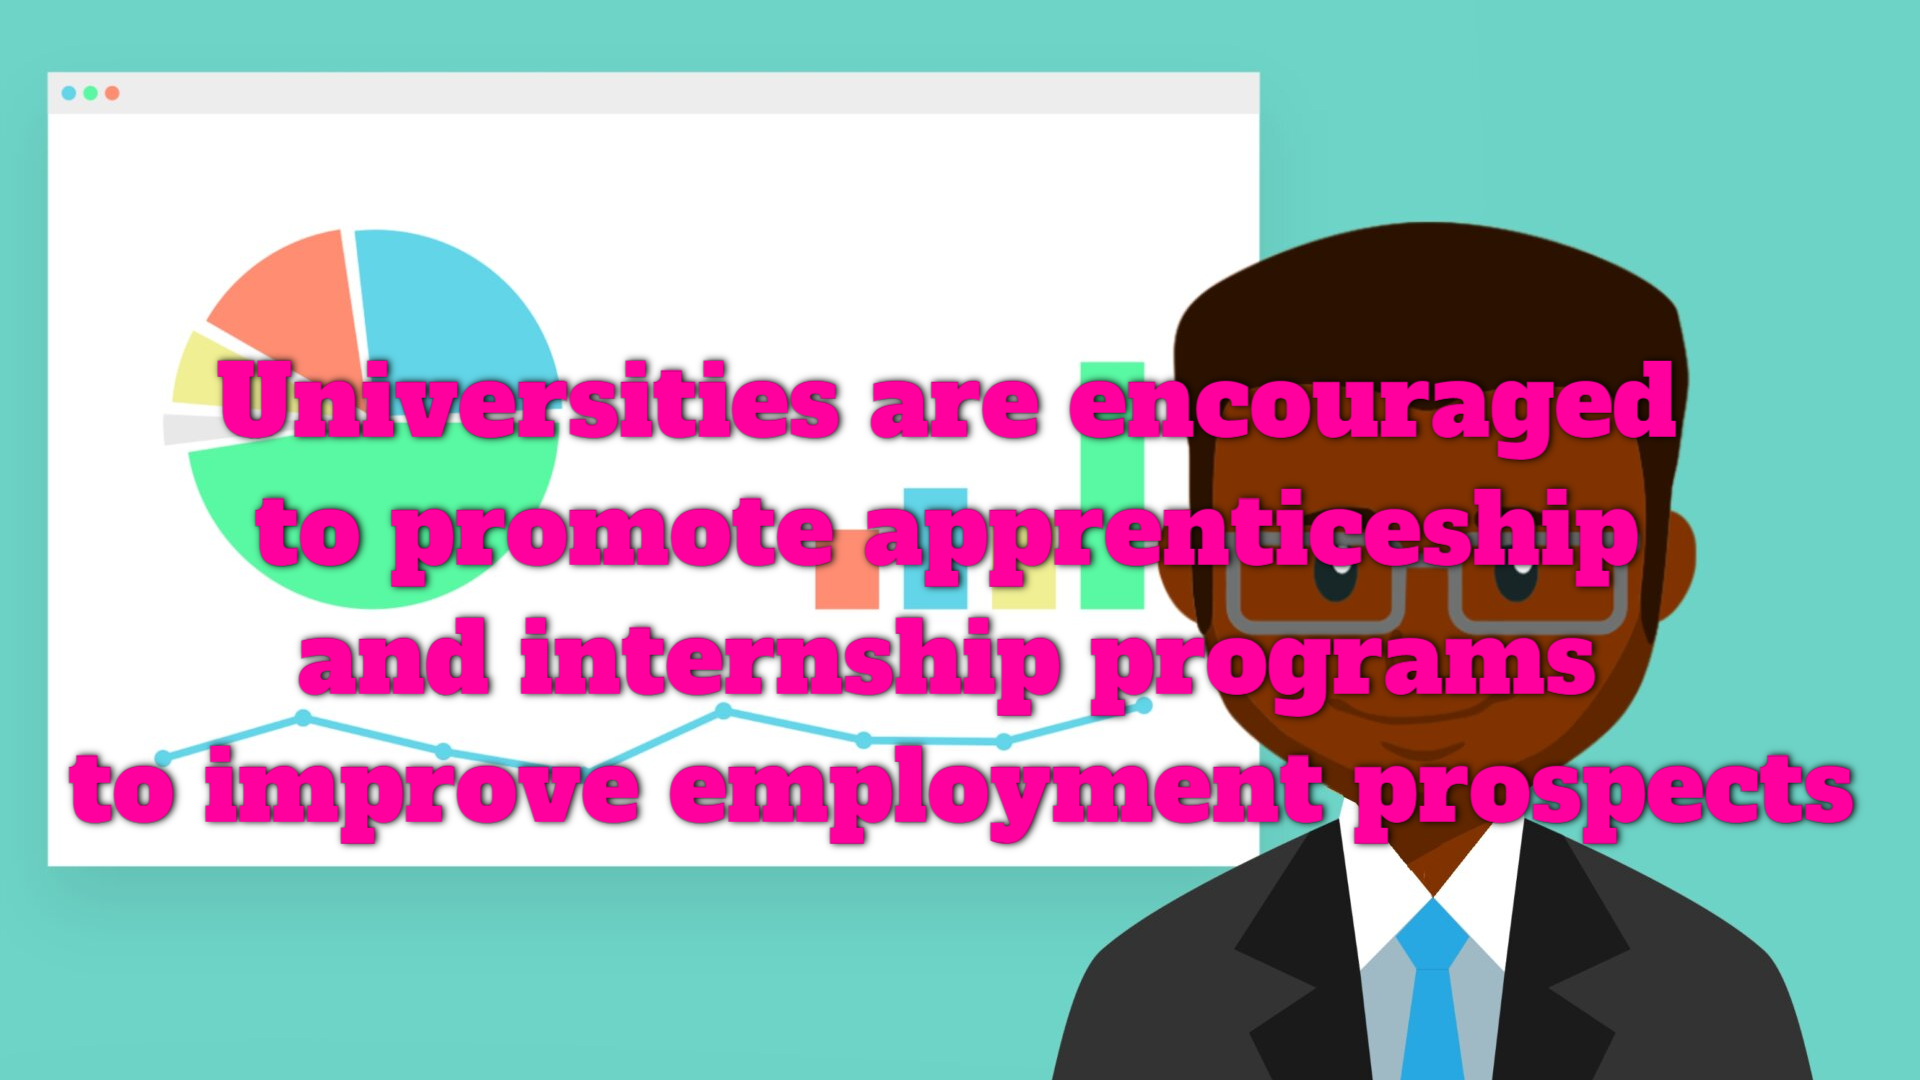 UGC encourages universities to promote apprenticeship/internship programs for employment prospects